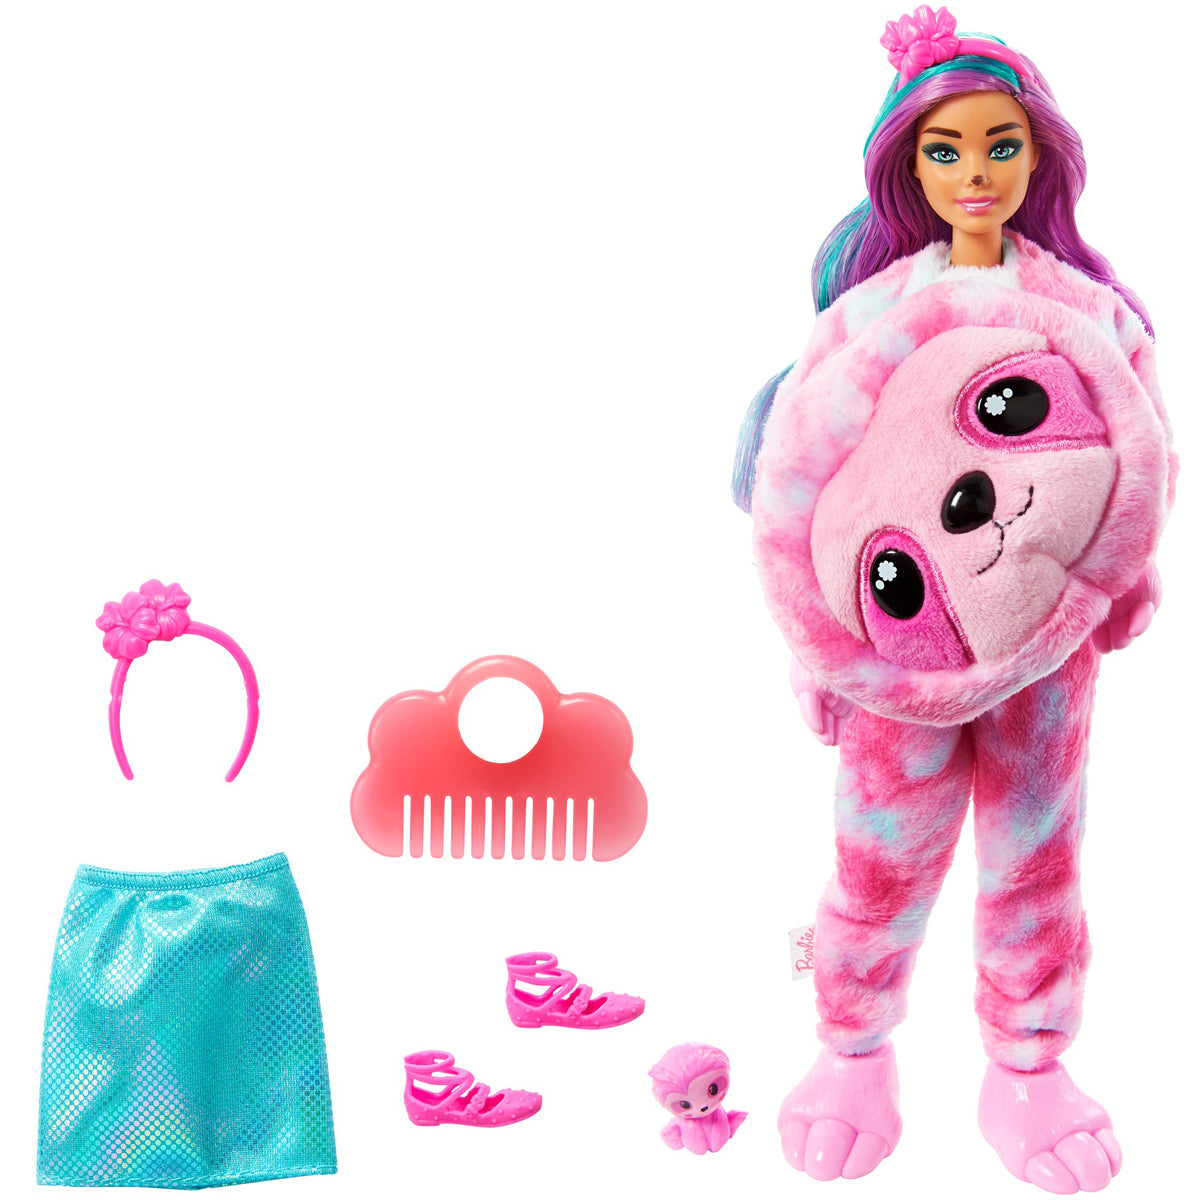 Barbie Cutie Reveal Sloth Doll